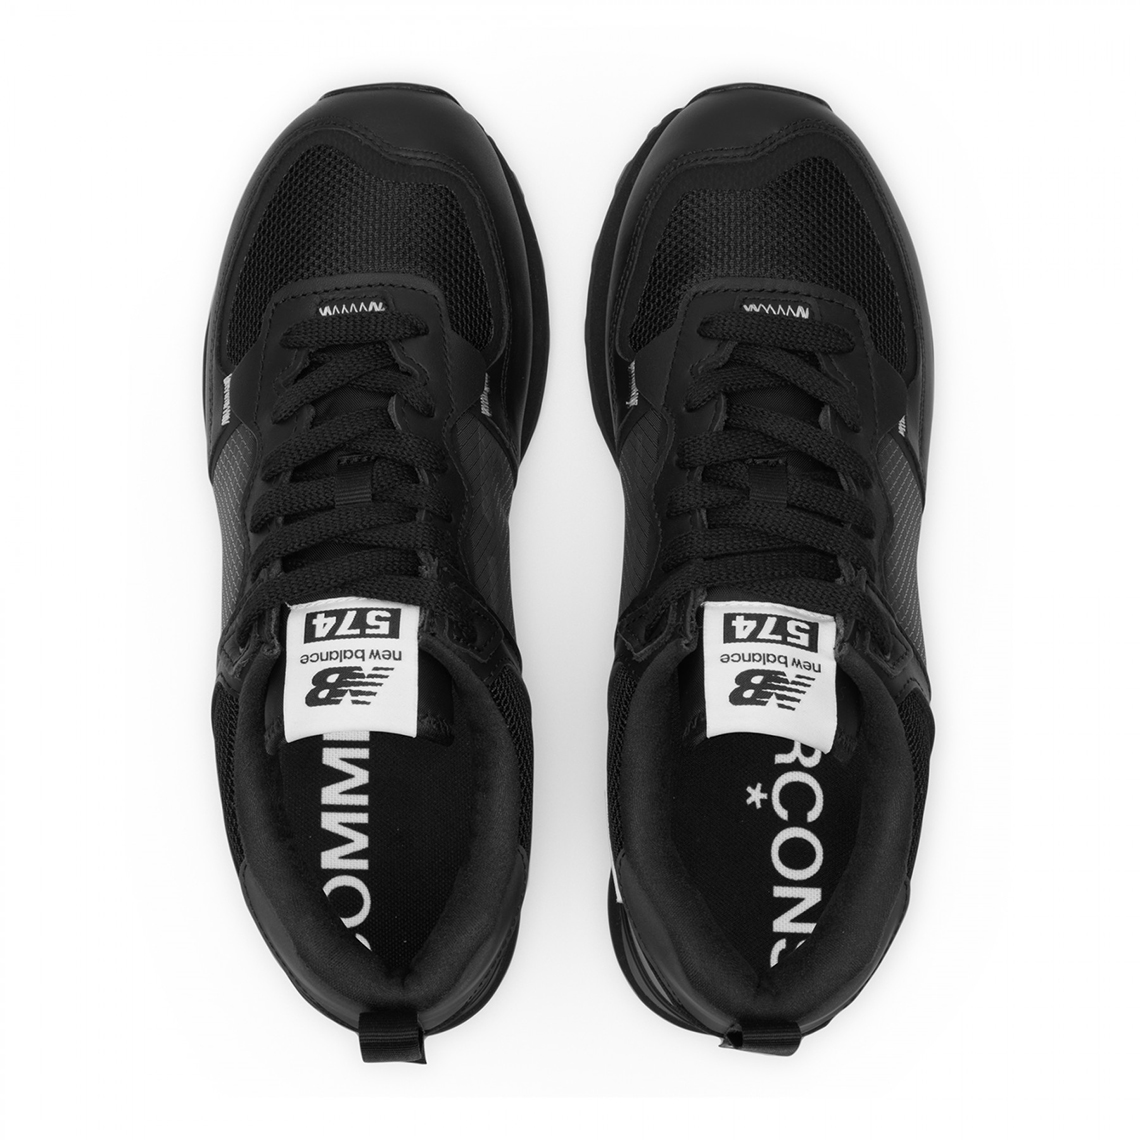 COMME des GARCONS Homme New Balance 574 | SneakerNews.com